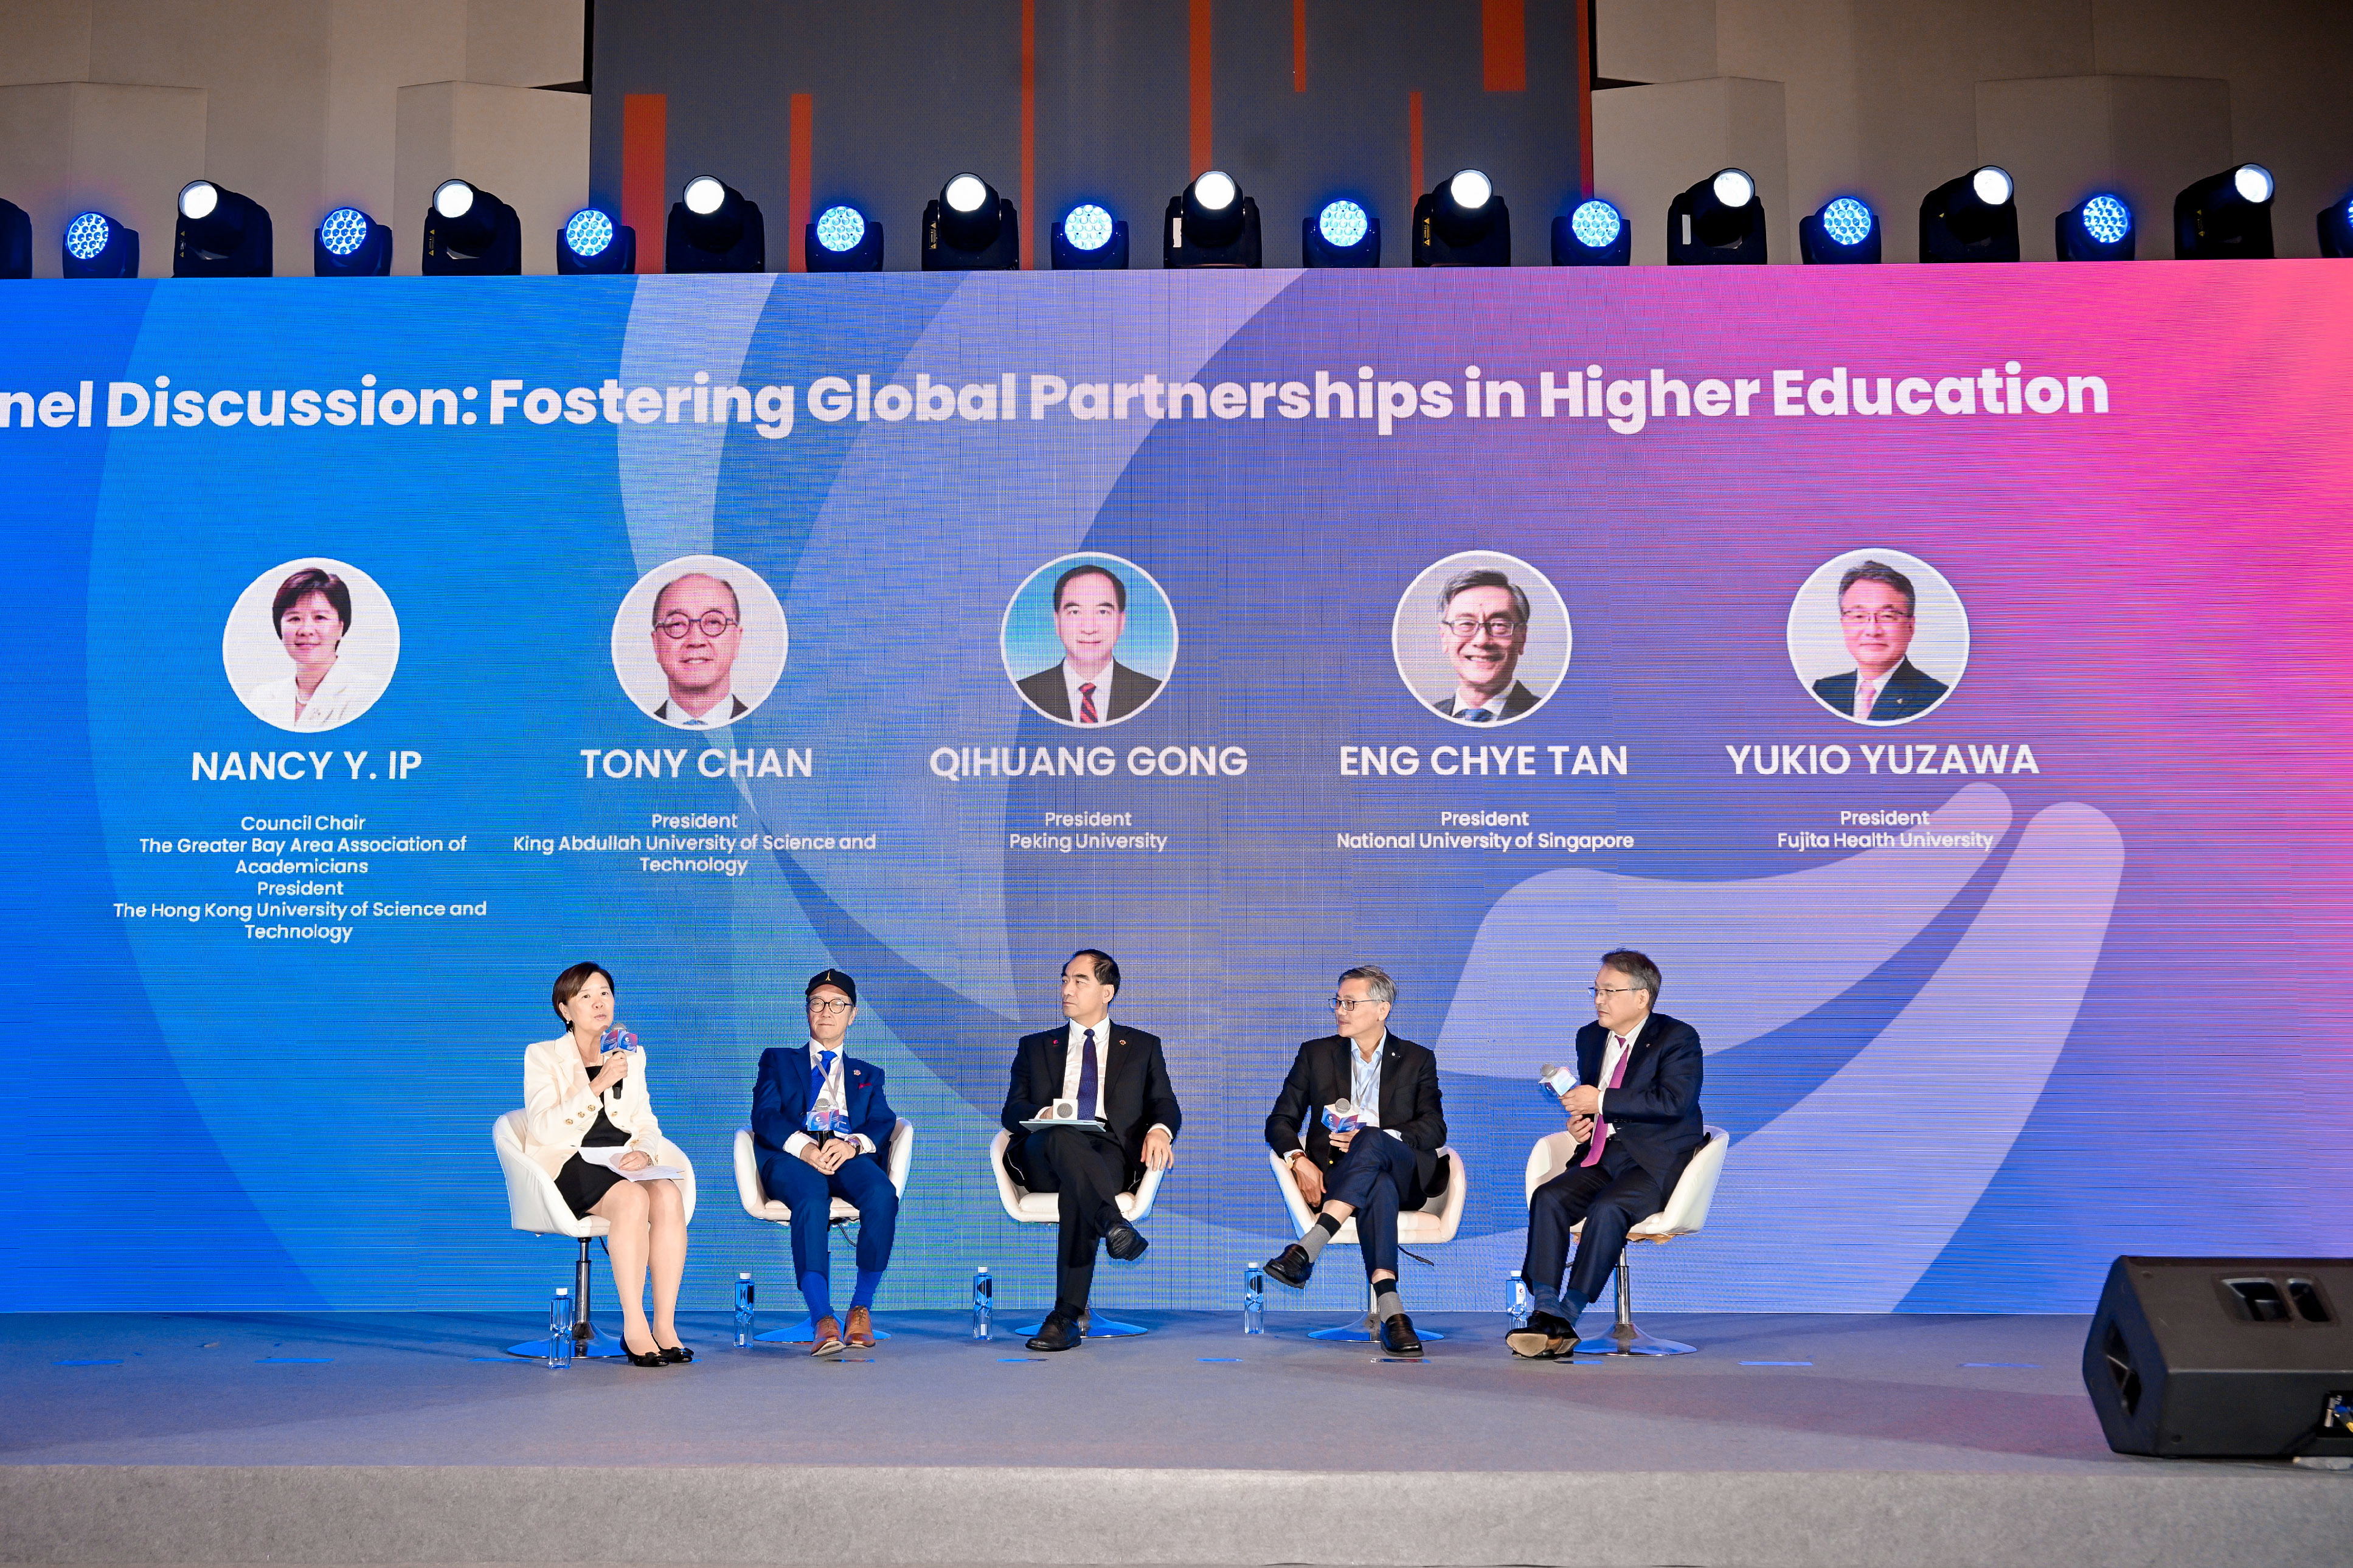 University President Forum “Fostering Global Partnerships in Higher Education”